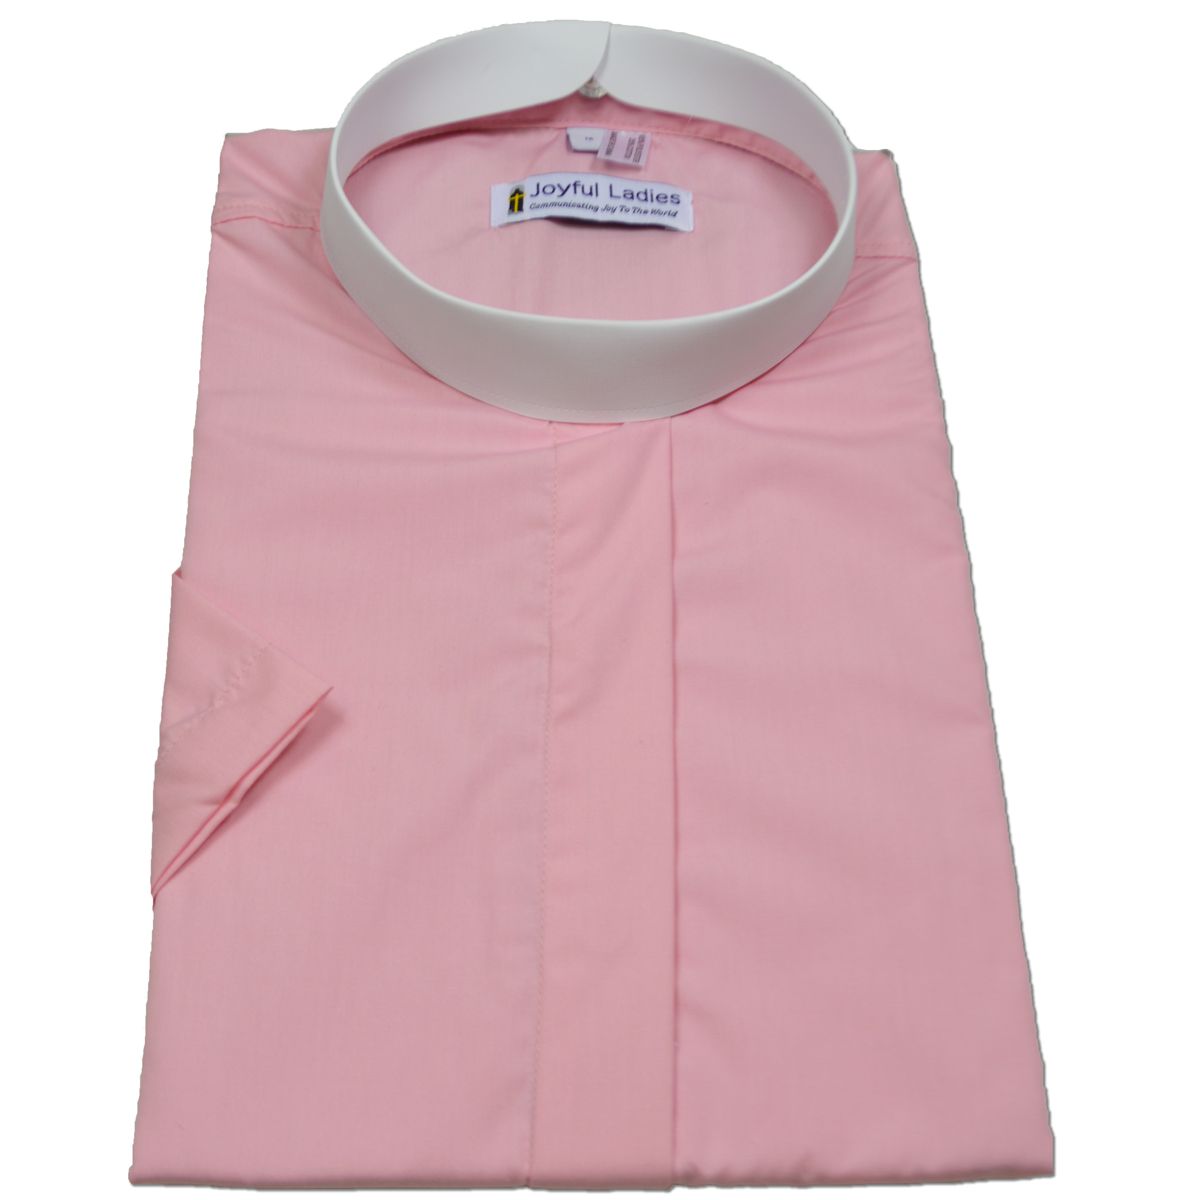 679. Women's Short-Sleeve (Banded) Full-Collar Clergy Shirt - Pink